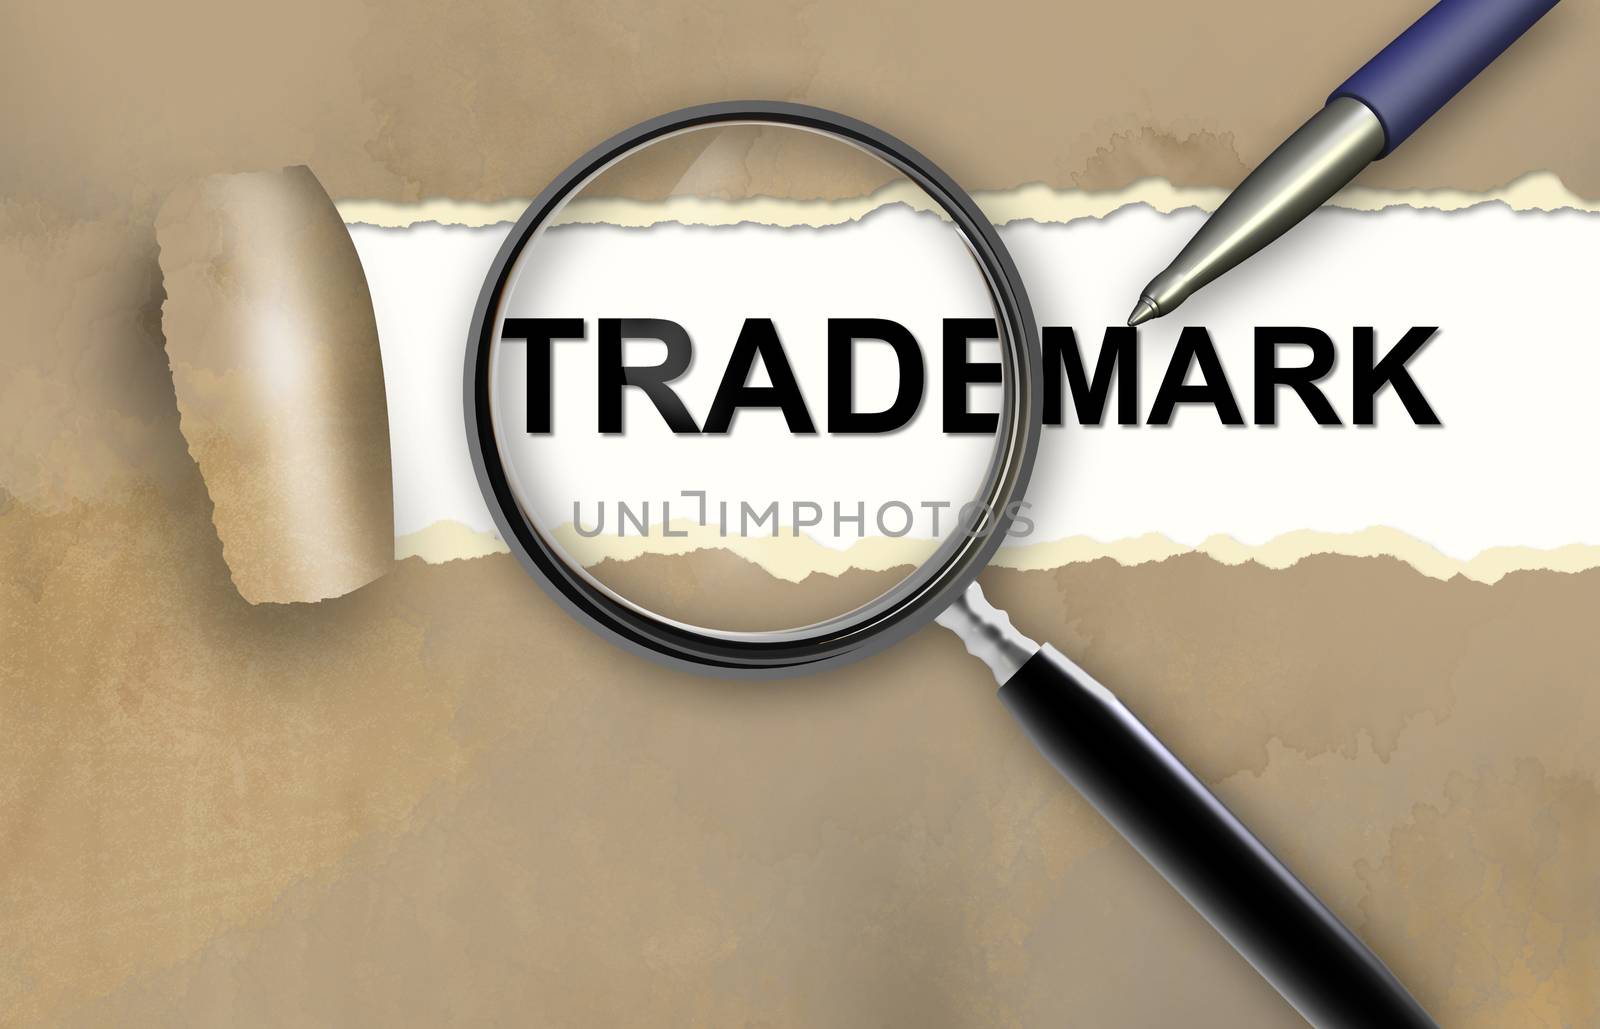 Trademark text by vitanovski